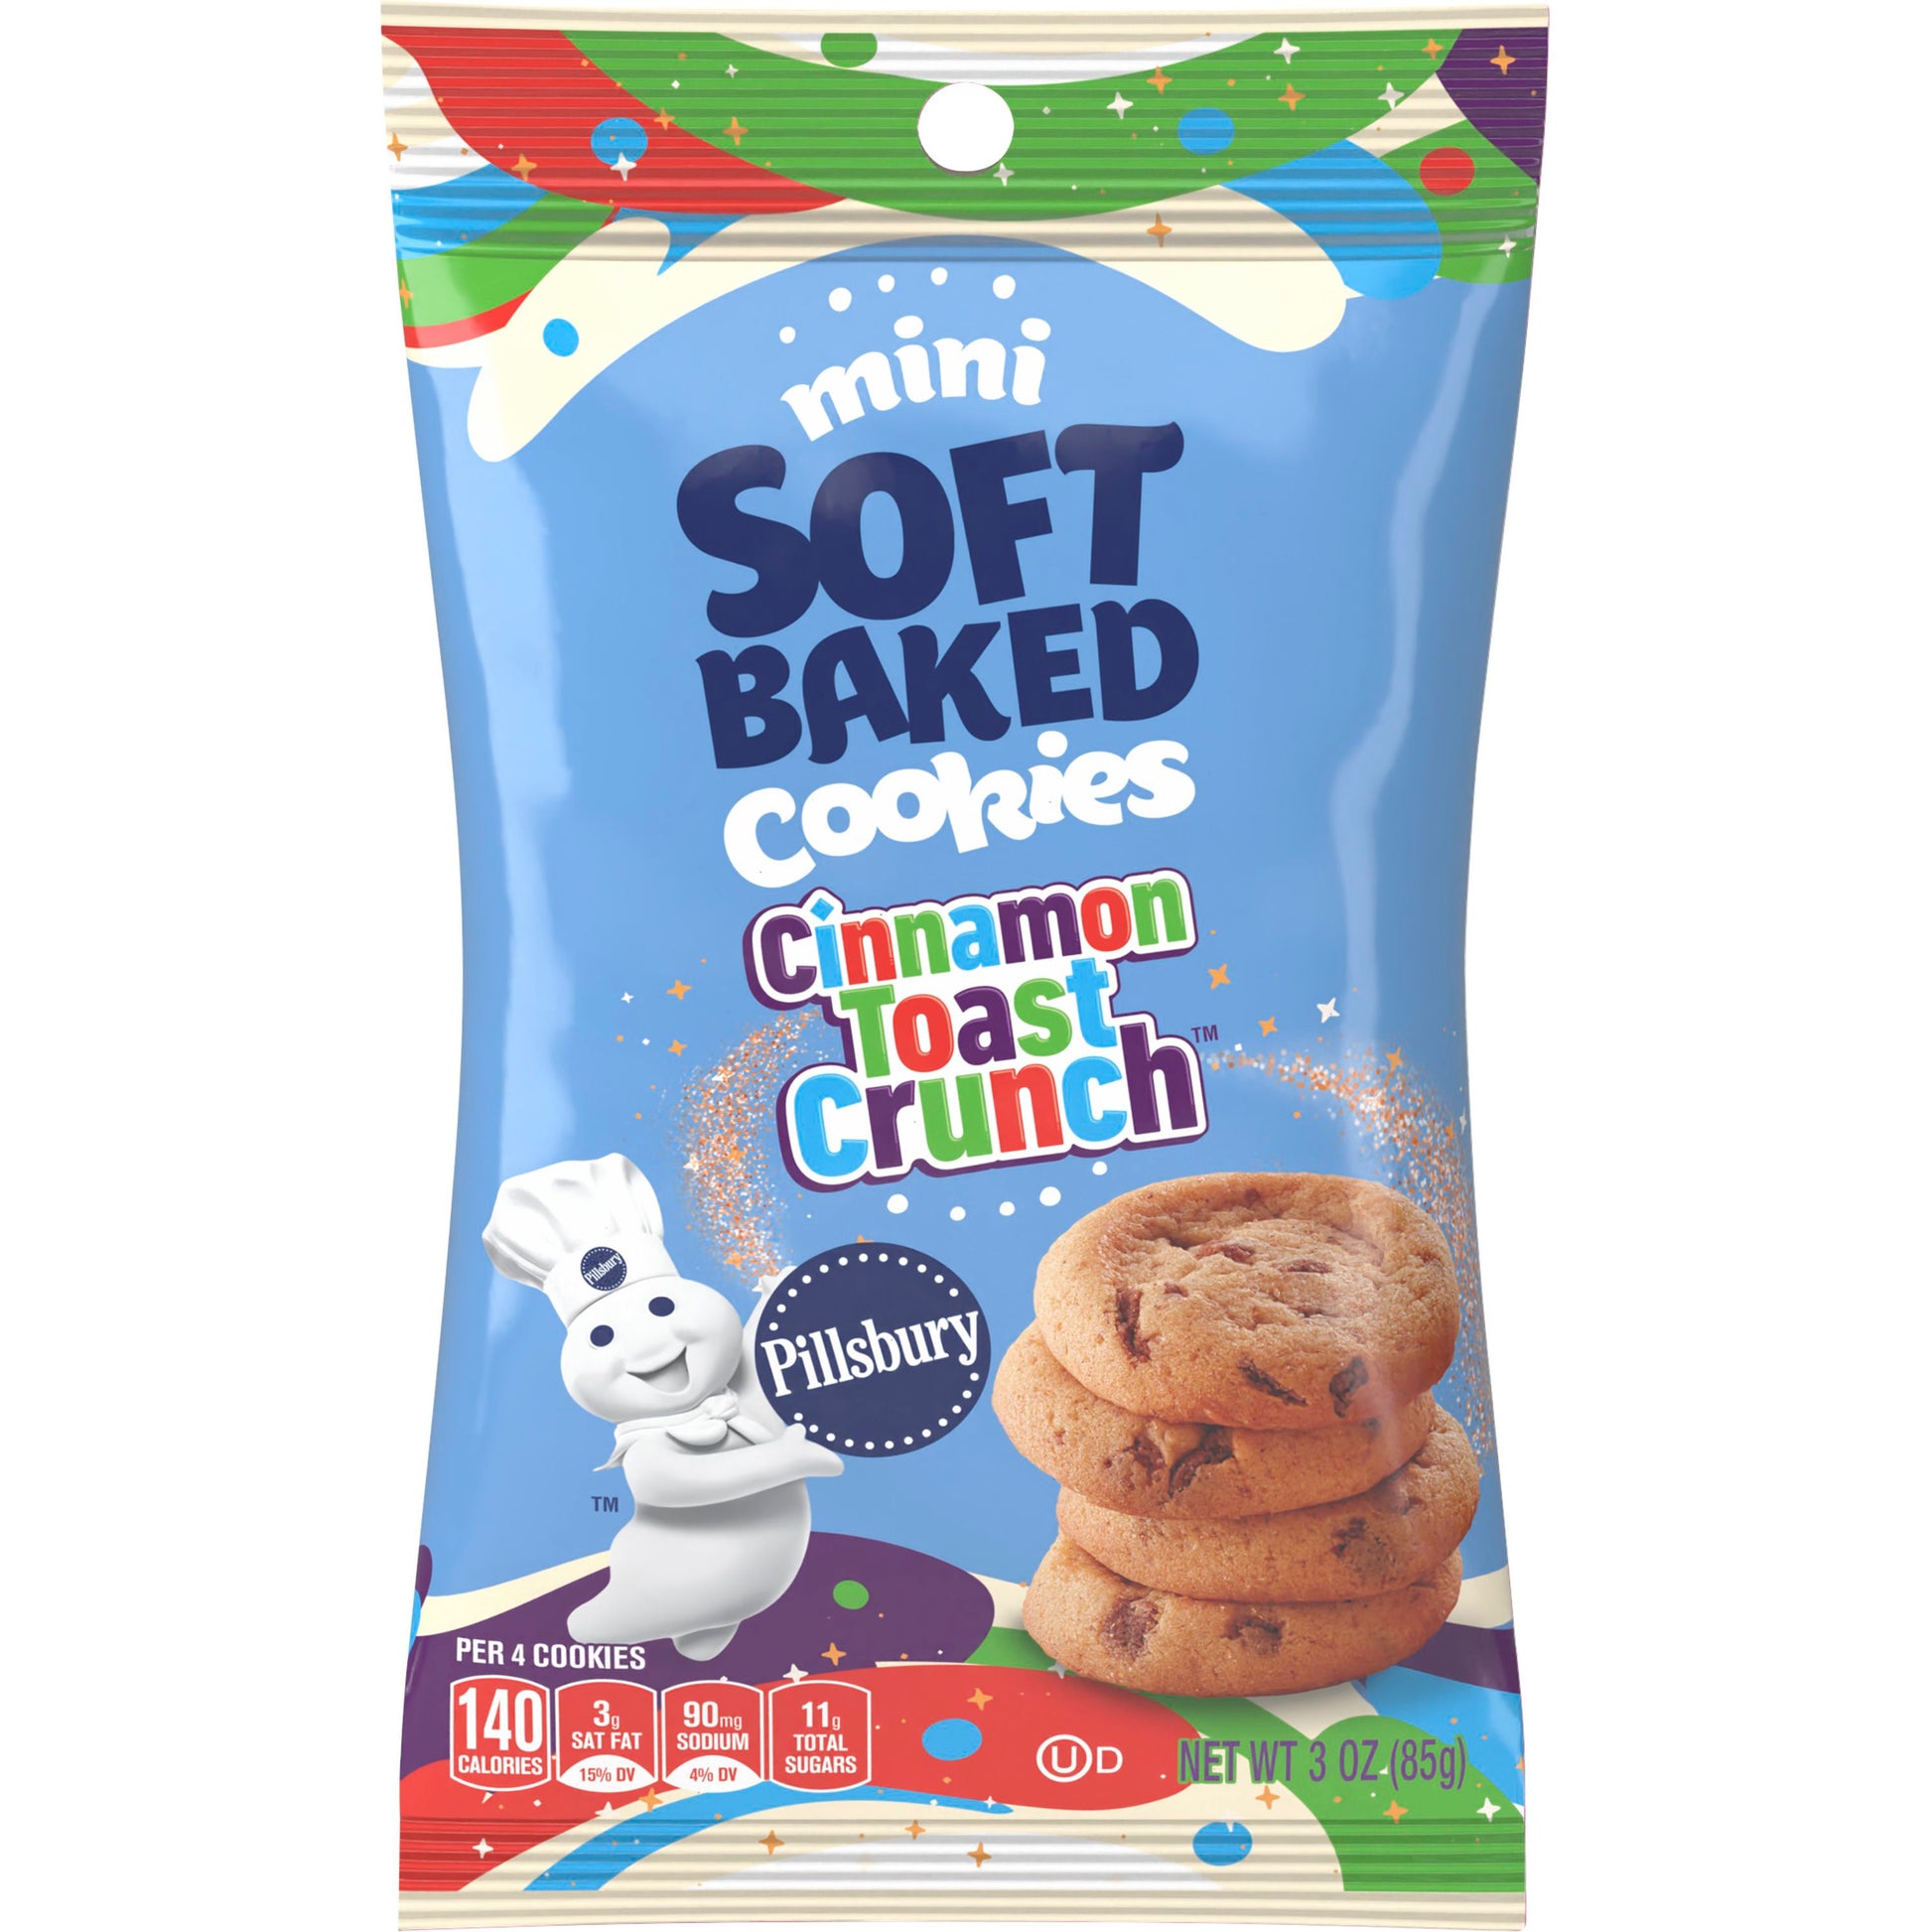 Pillsbury Mini Soft Baked Cookies Cinnamon Toast Crunch 3oz 6 Count